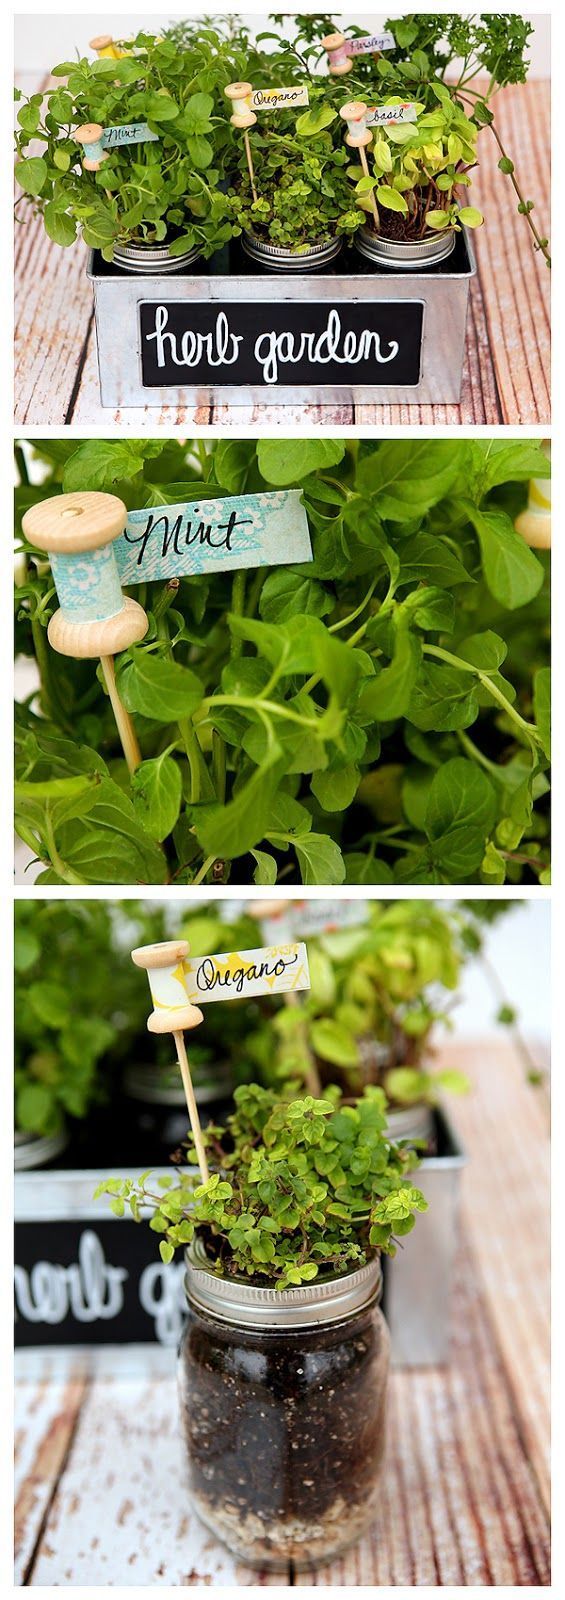 DIY Herb Garden & Plant Markers. Cute garden idea!